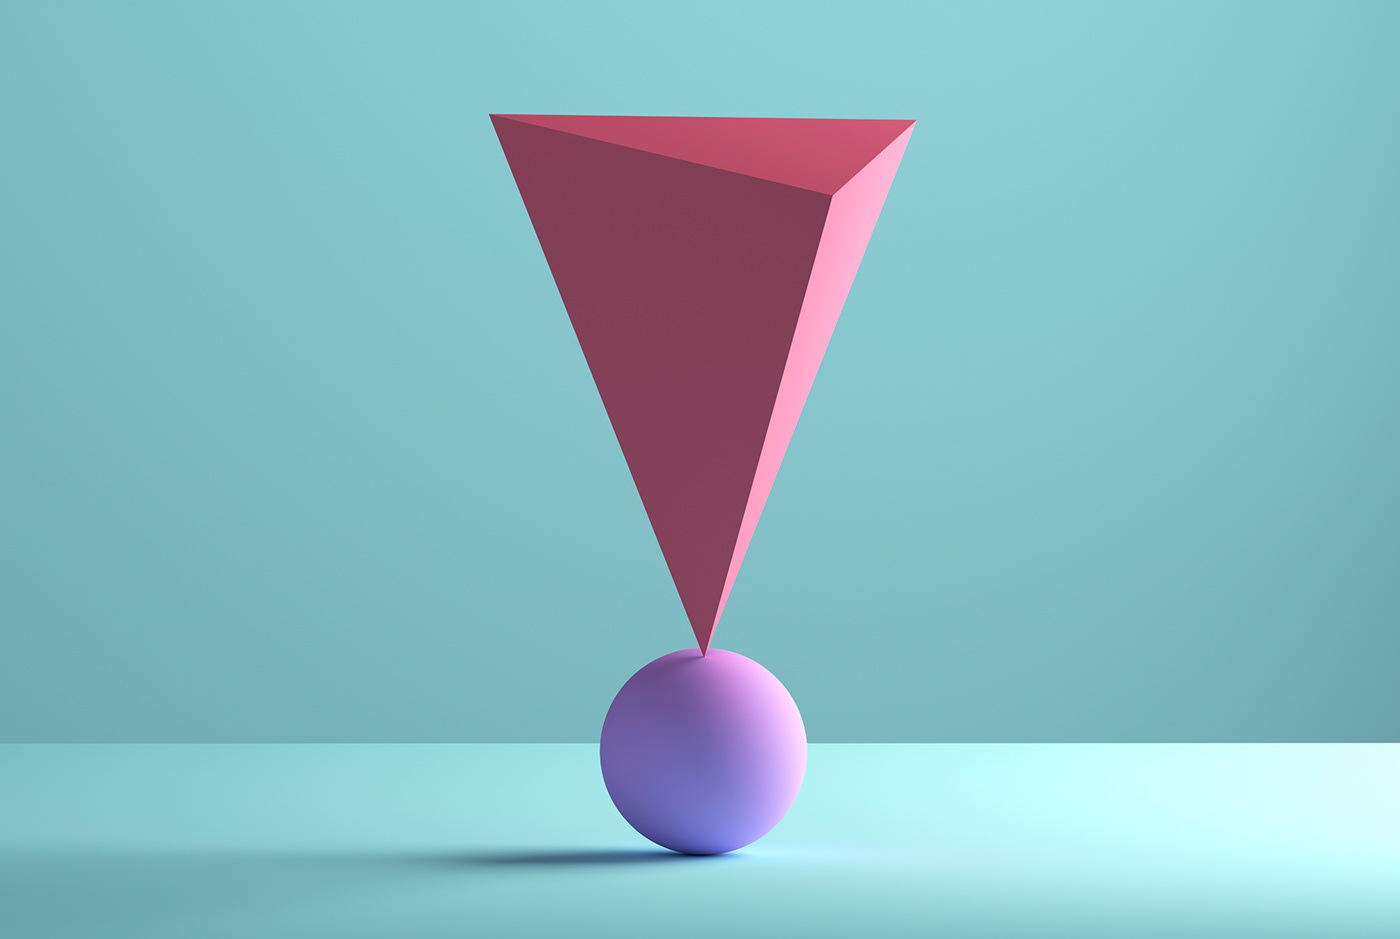 blender 3d 3D CGI simple minimalist Minimalism balance balanced